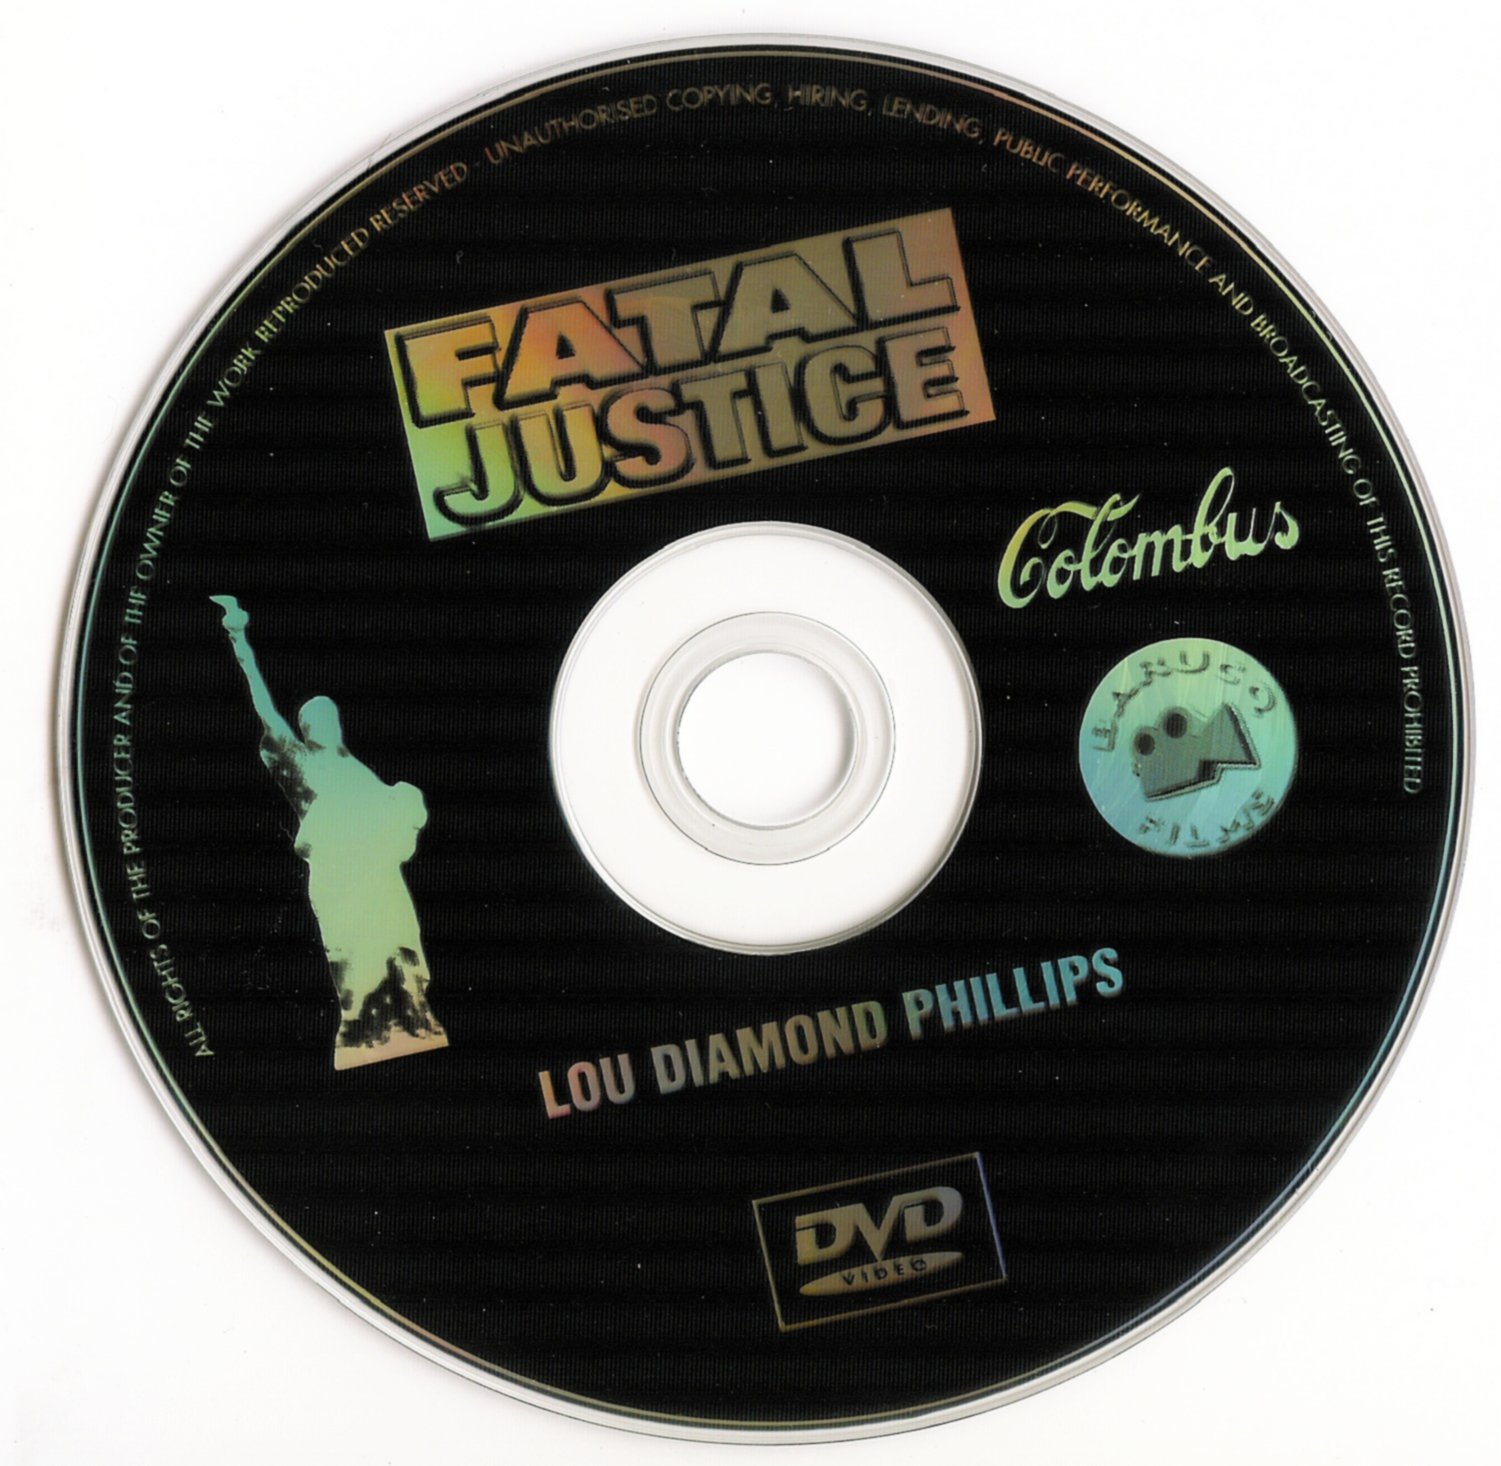 Fatal justice